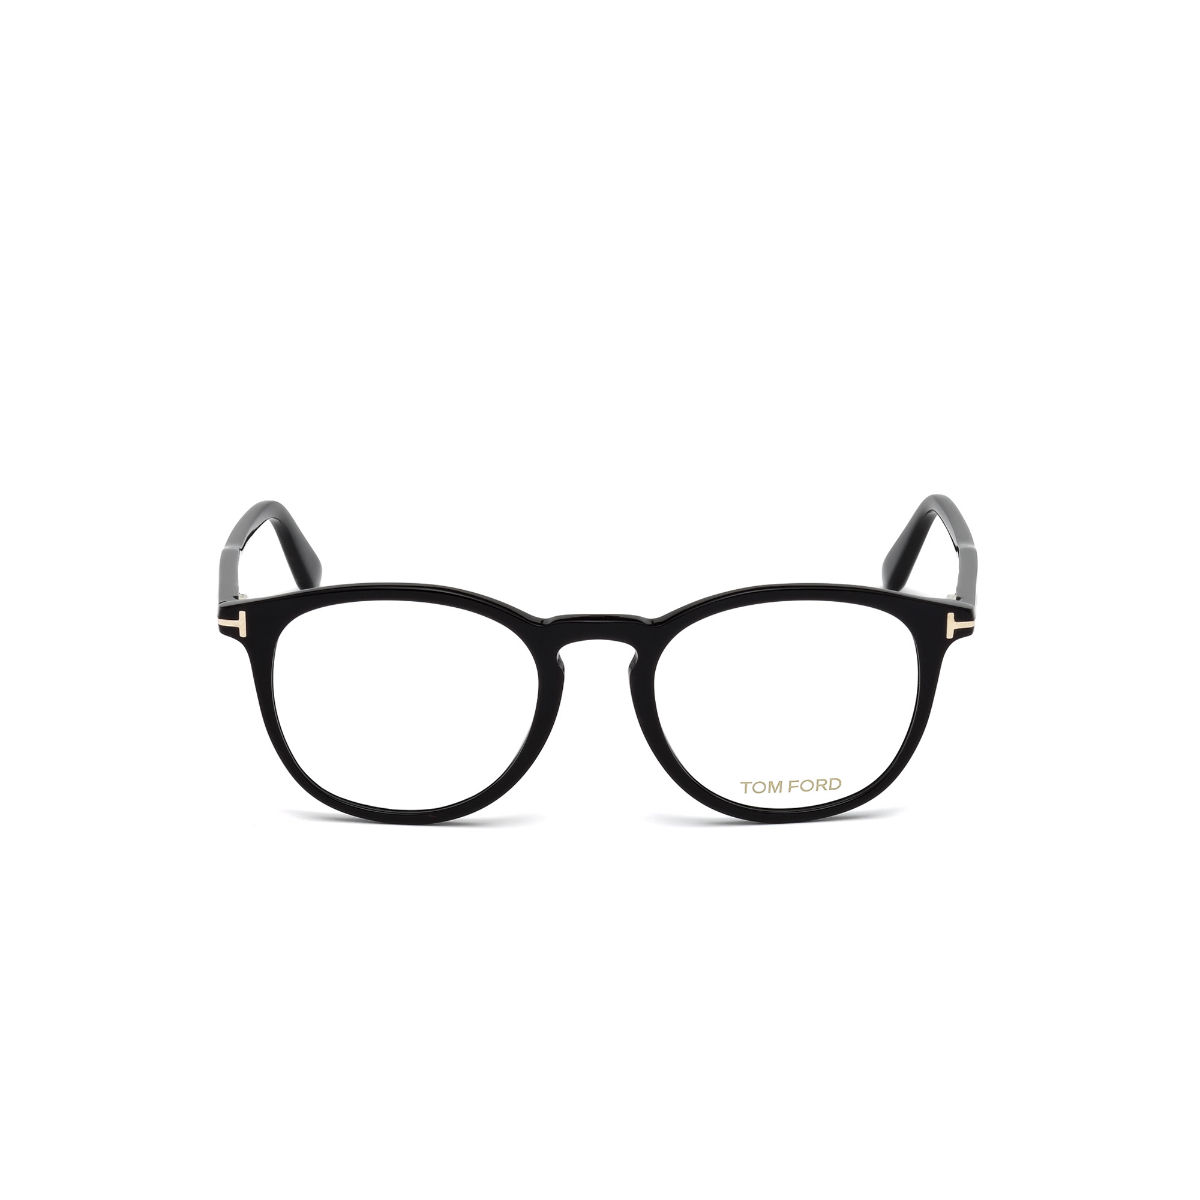 Tom Ford Eyewear Black Plastic Frames FT5401 49 001